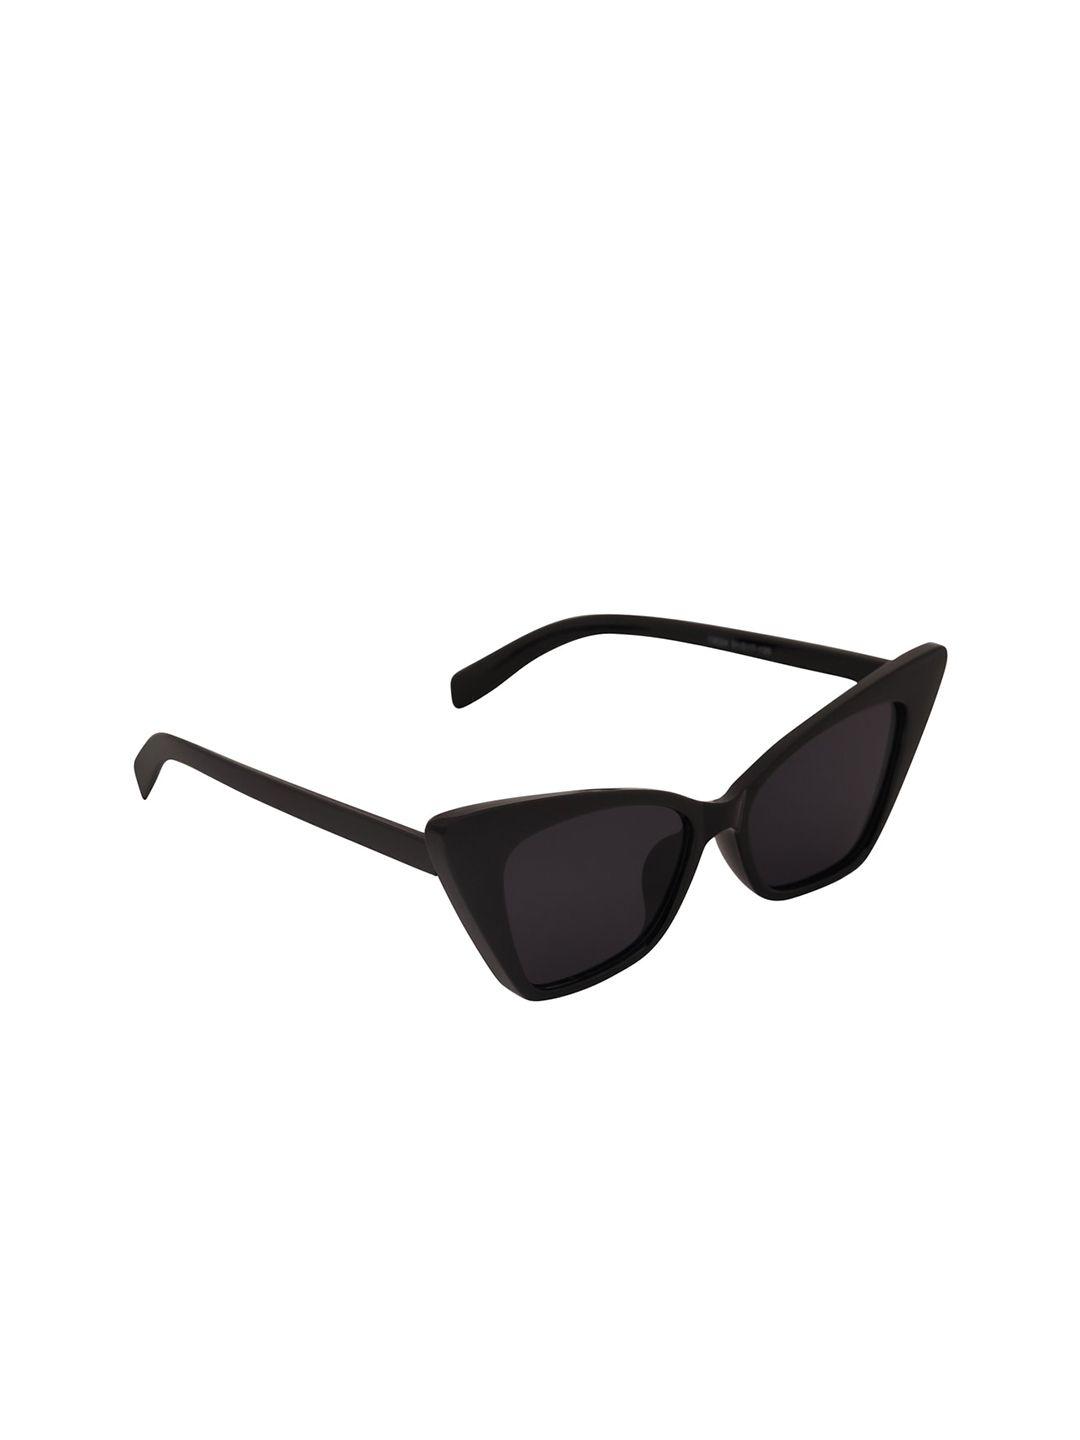 peter jones eyewear unisex cateye sunglasses with uv protected lens